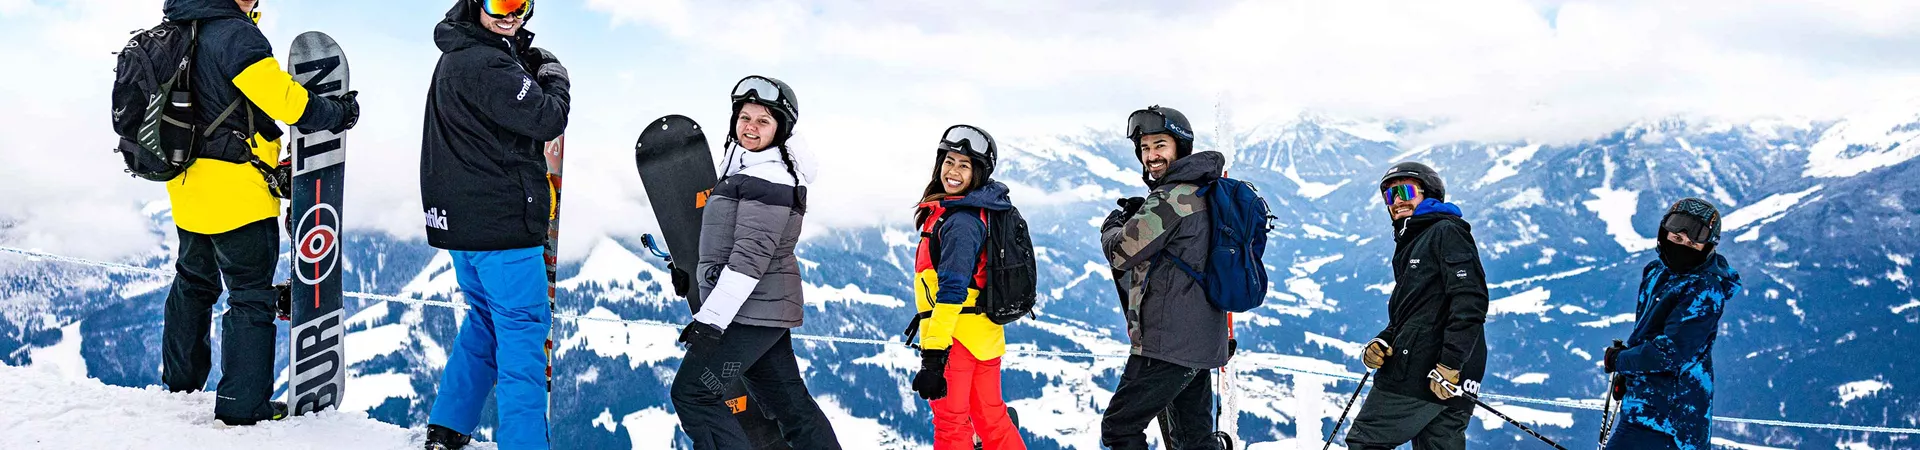 Group Skiers Snowboarders On Snowy Mountains Austria 0045EURS2023